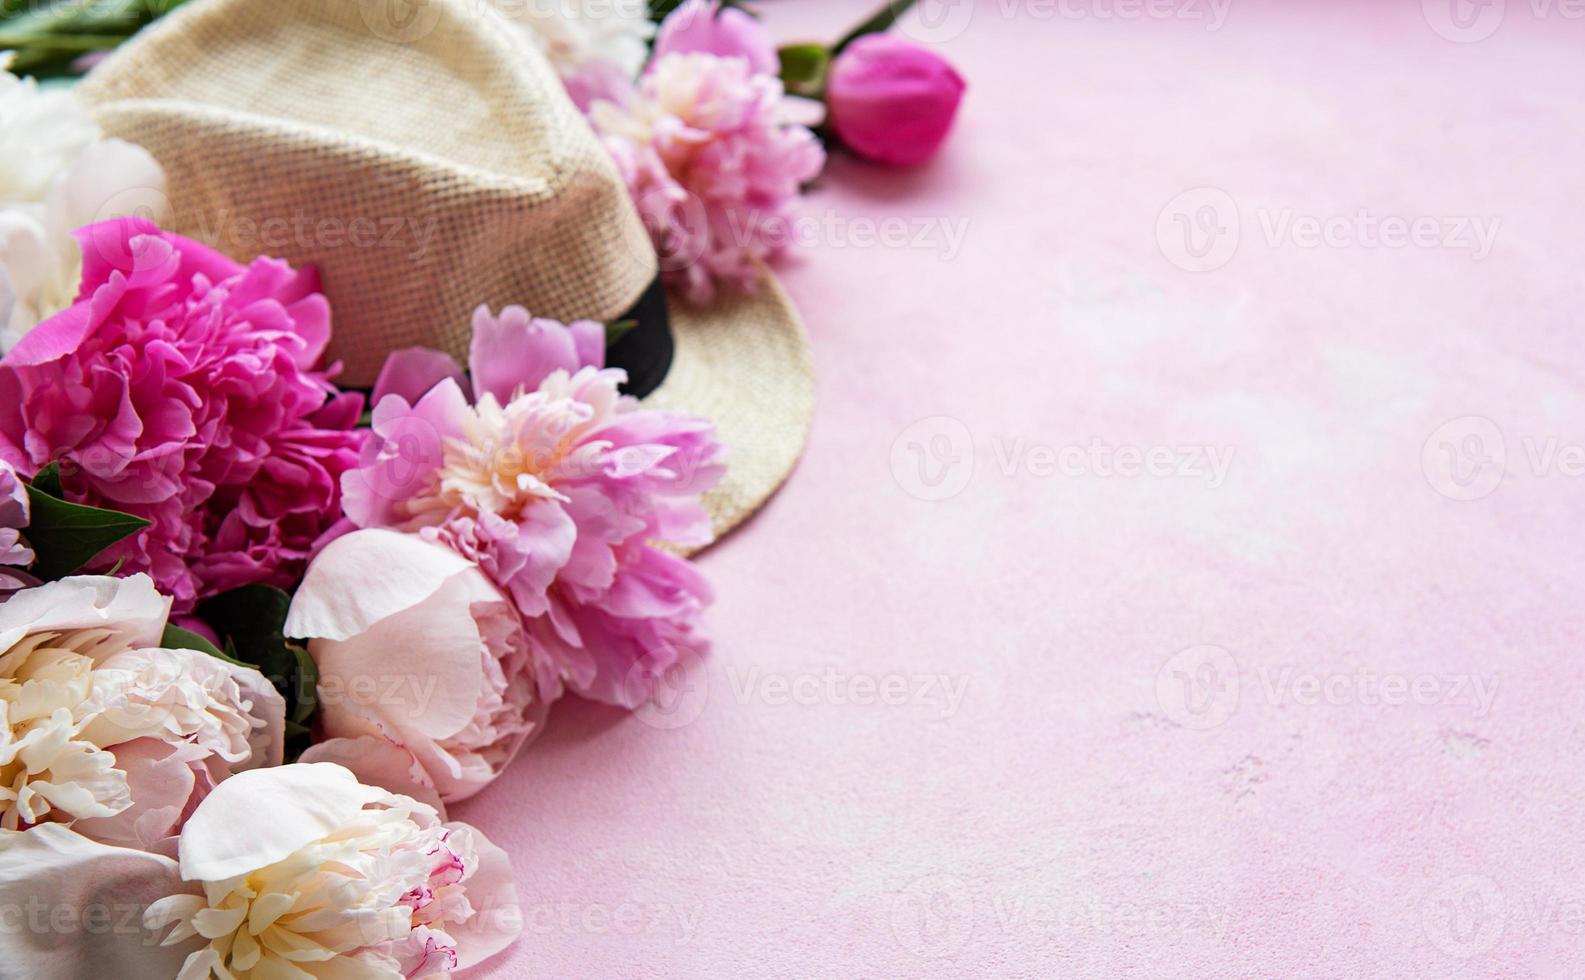 roze pioenrozen en hoed op een roze betonnen ondergrond foto